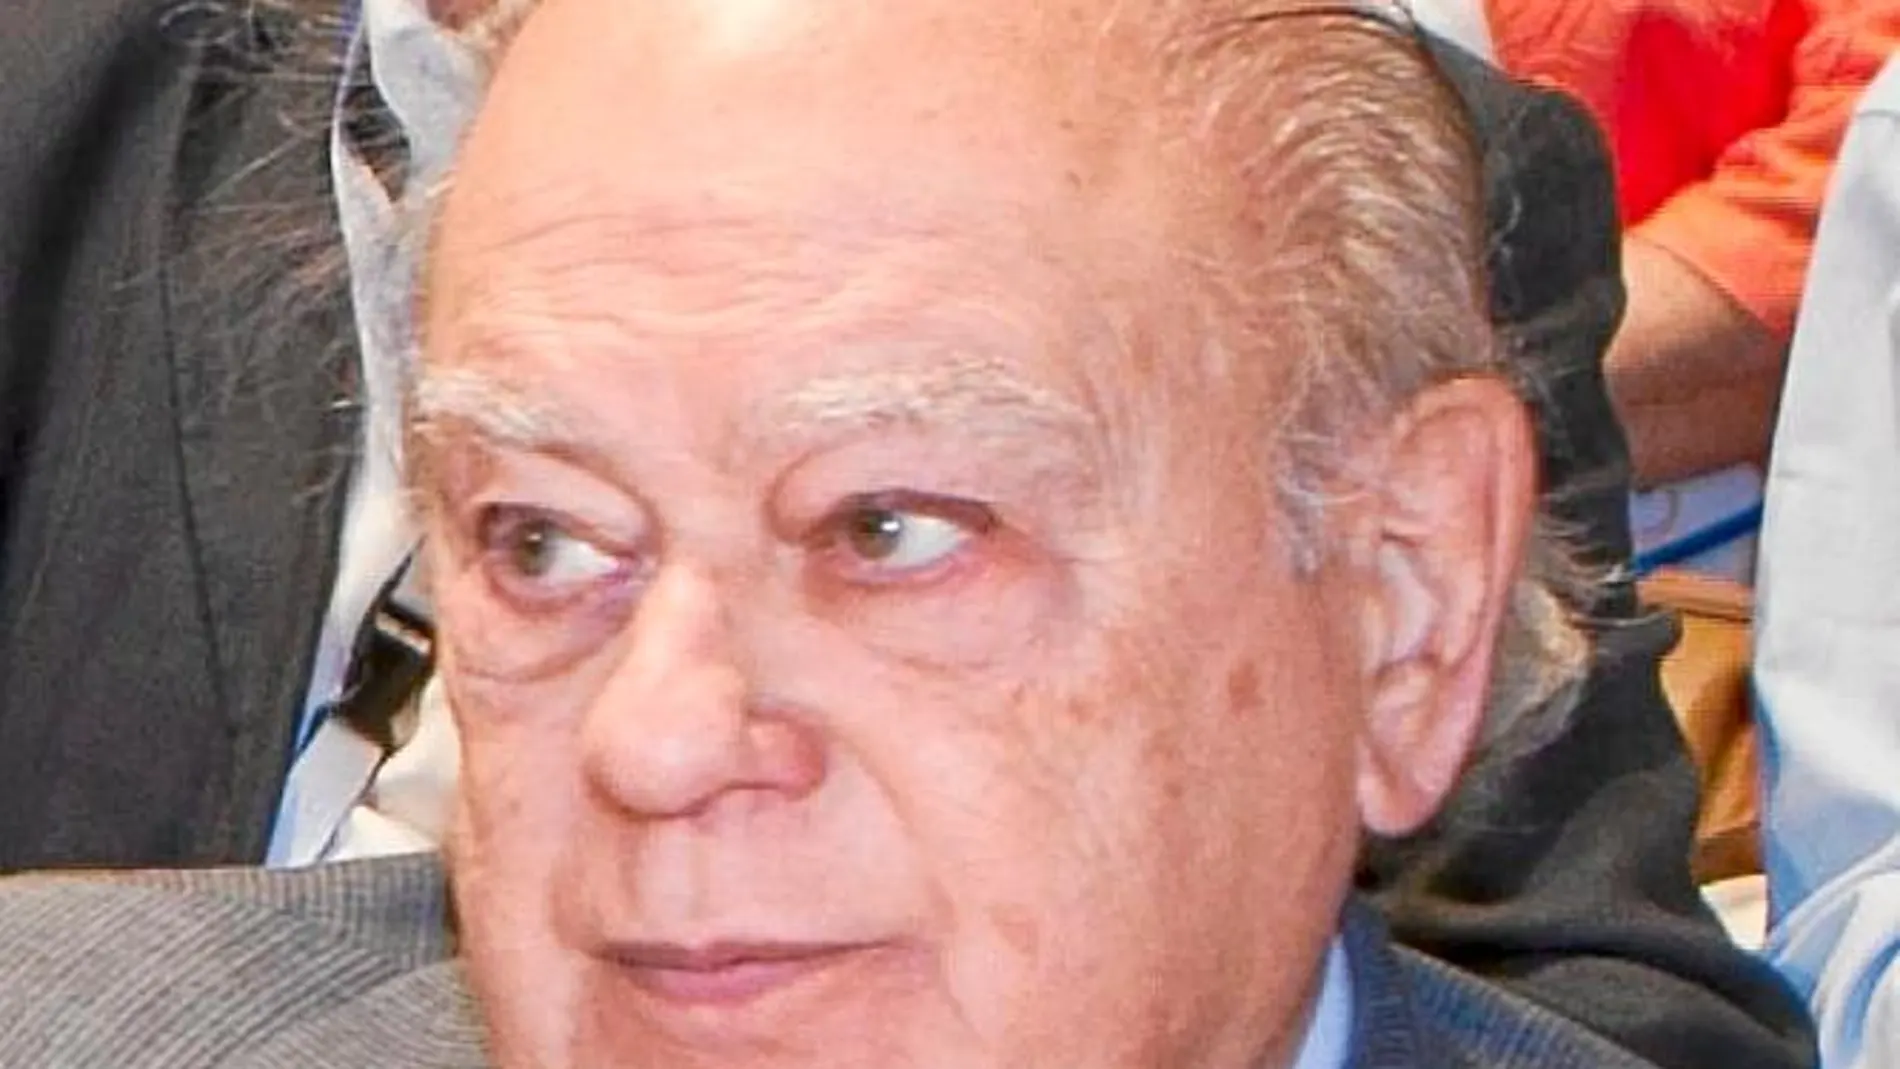 Jordi Pujol